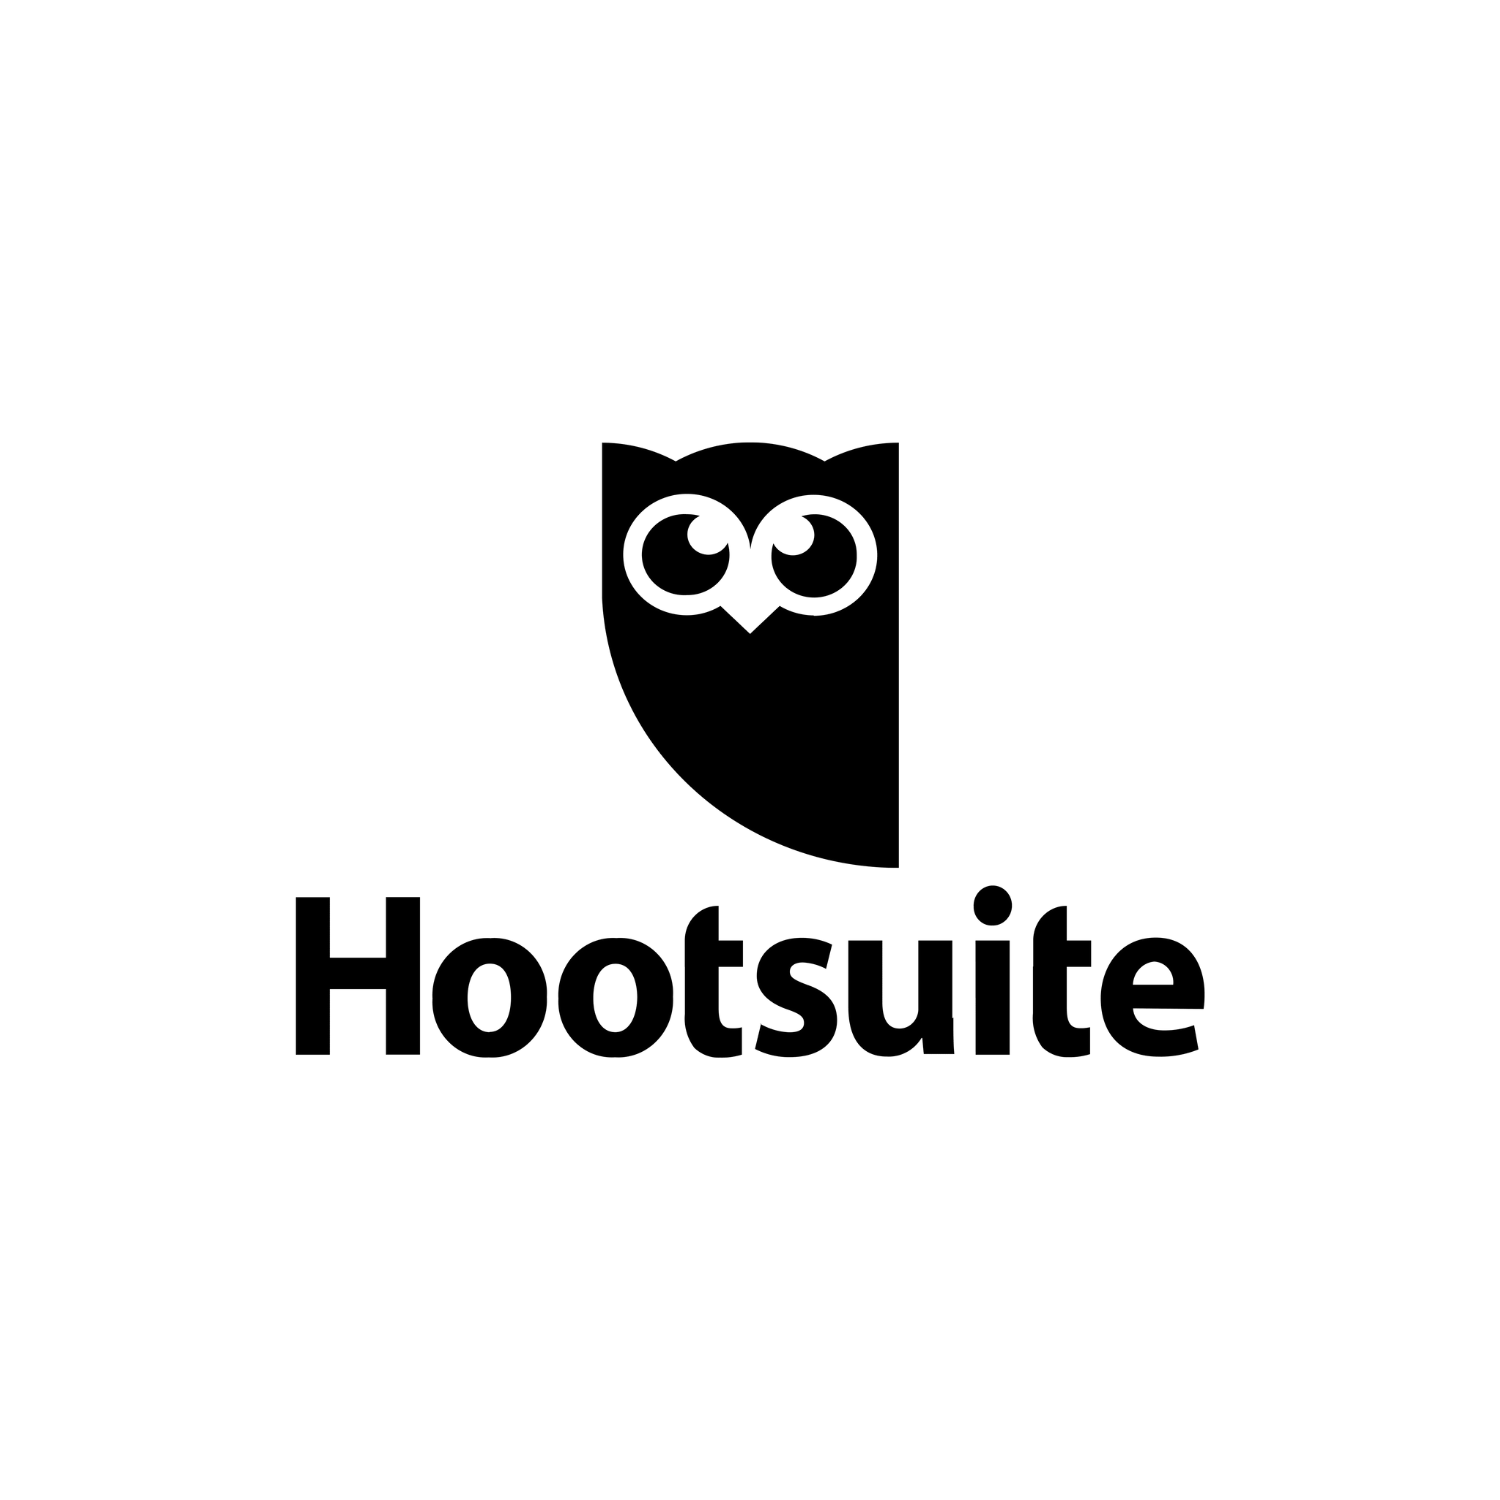 hootsuite logo